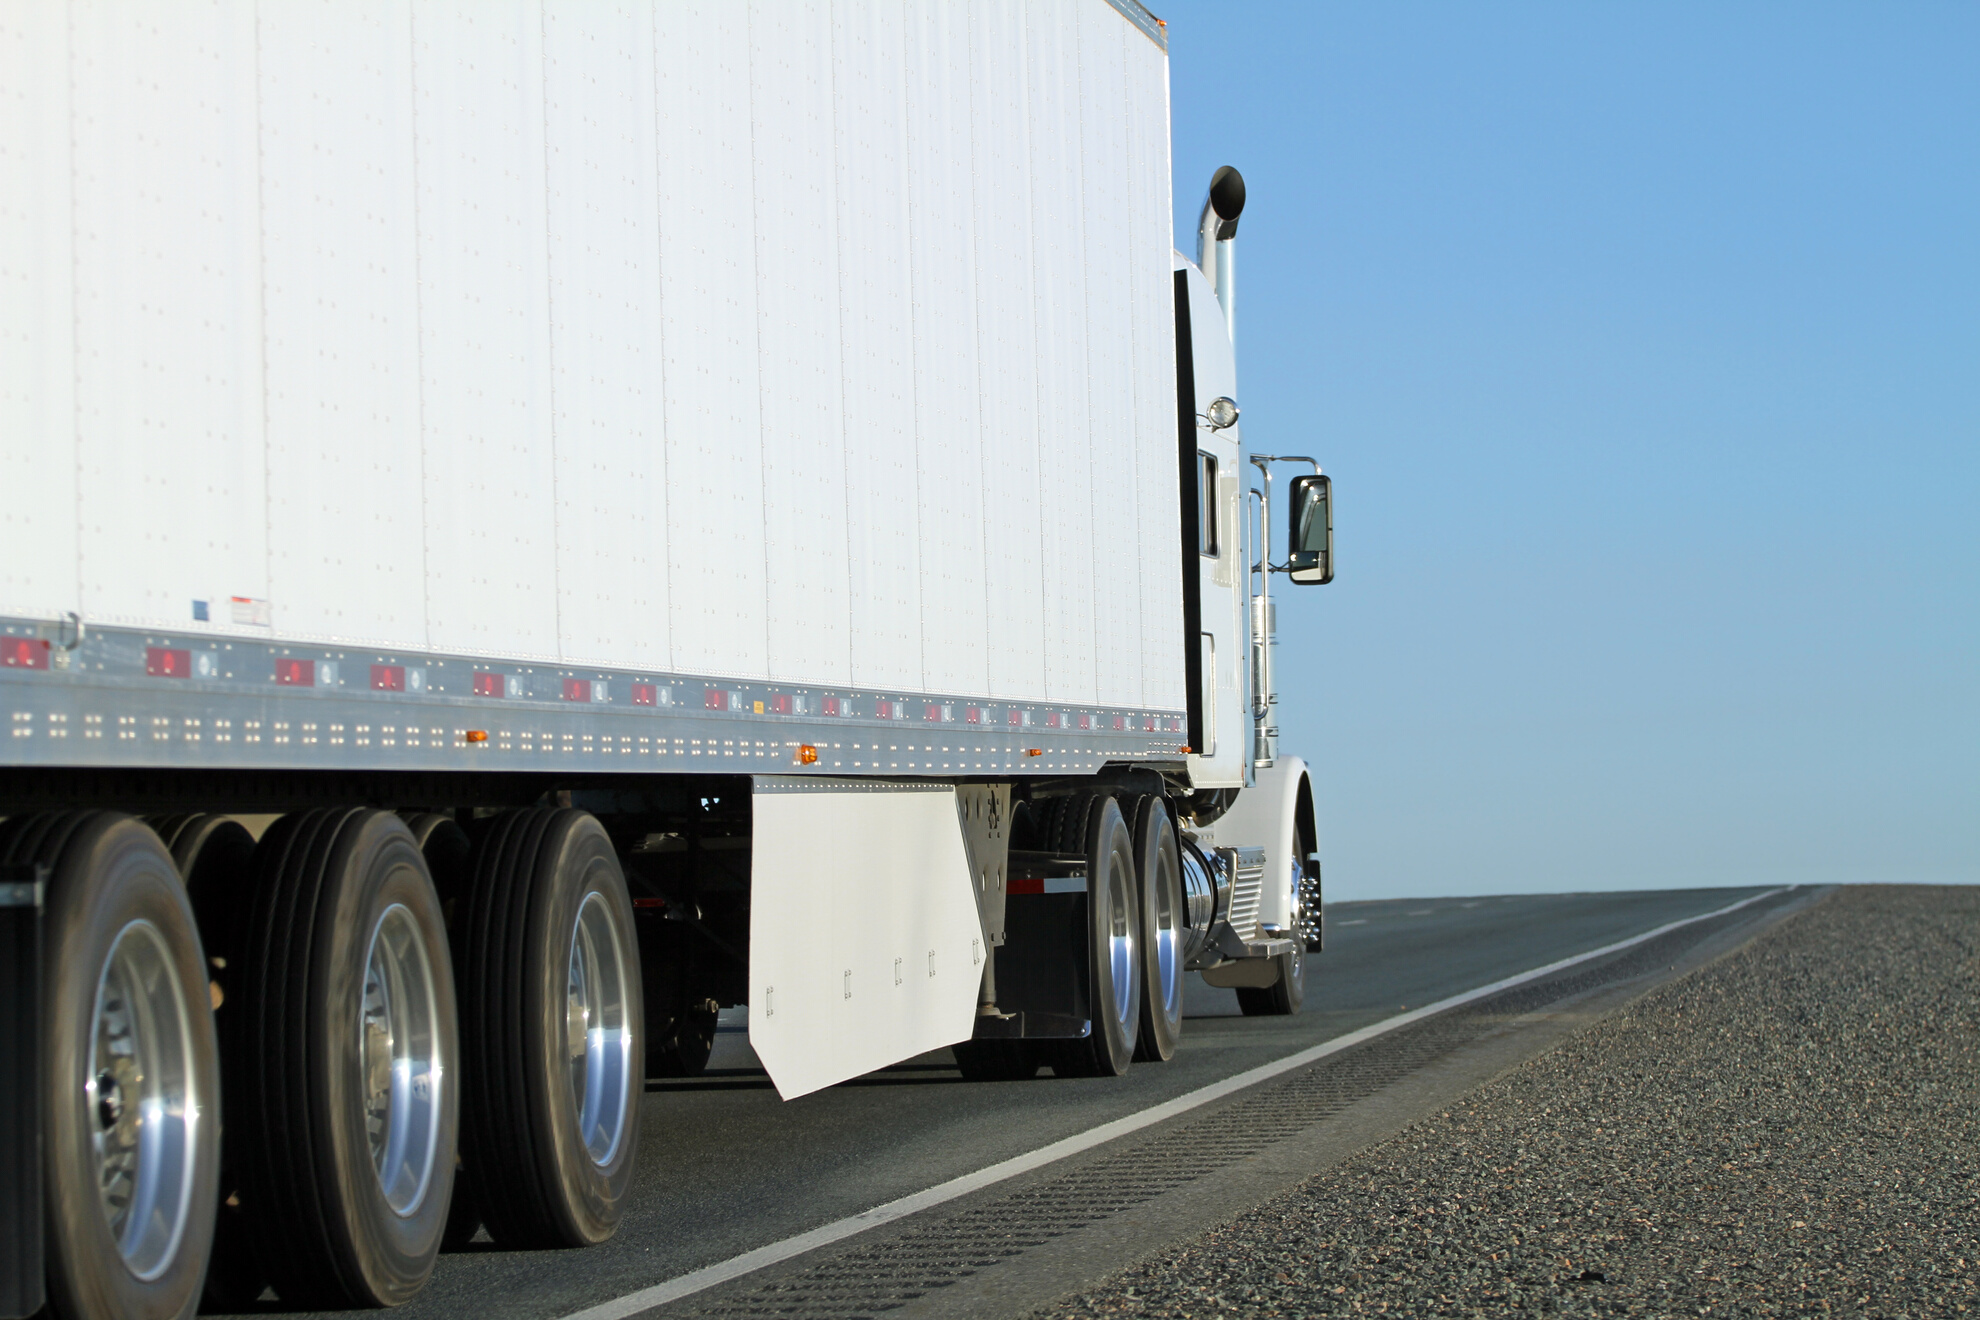 Trucking Freight